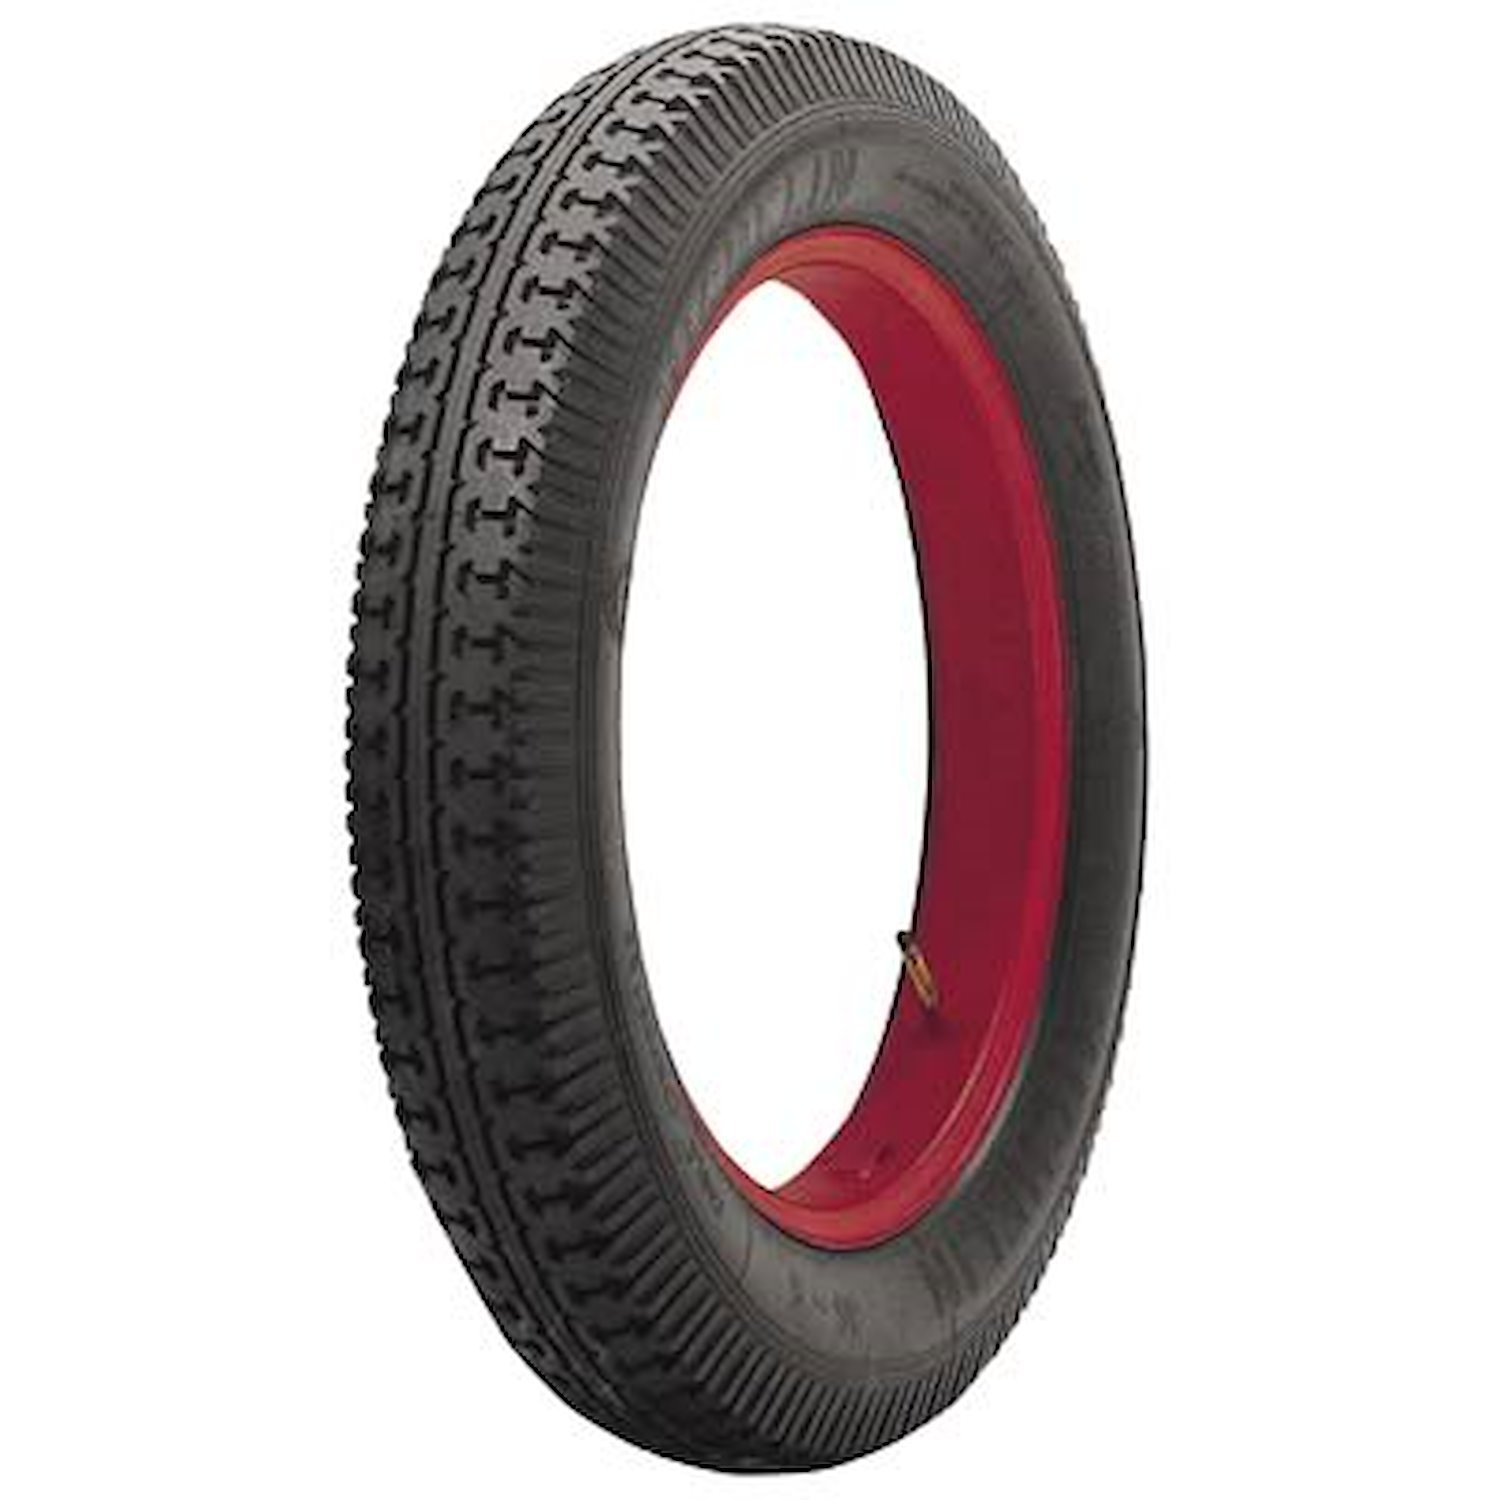 70600 Tire, Michelin Double Rivet, 650/700-17